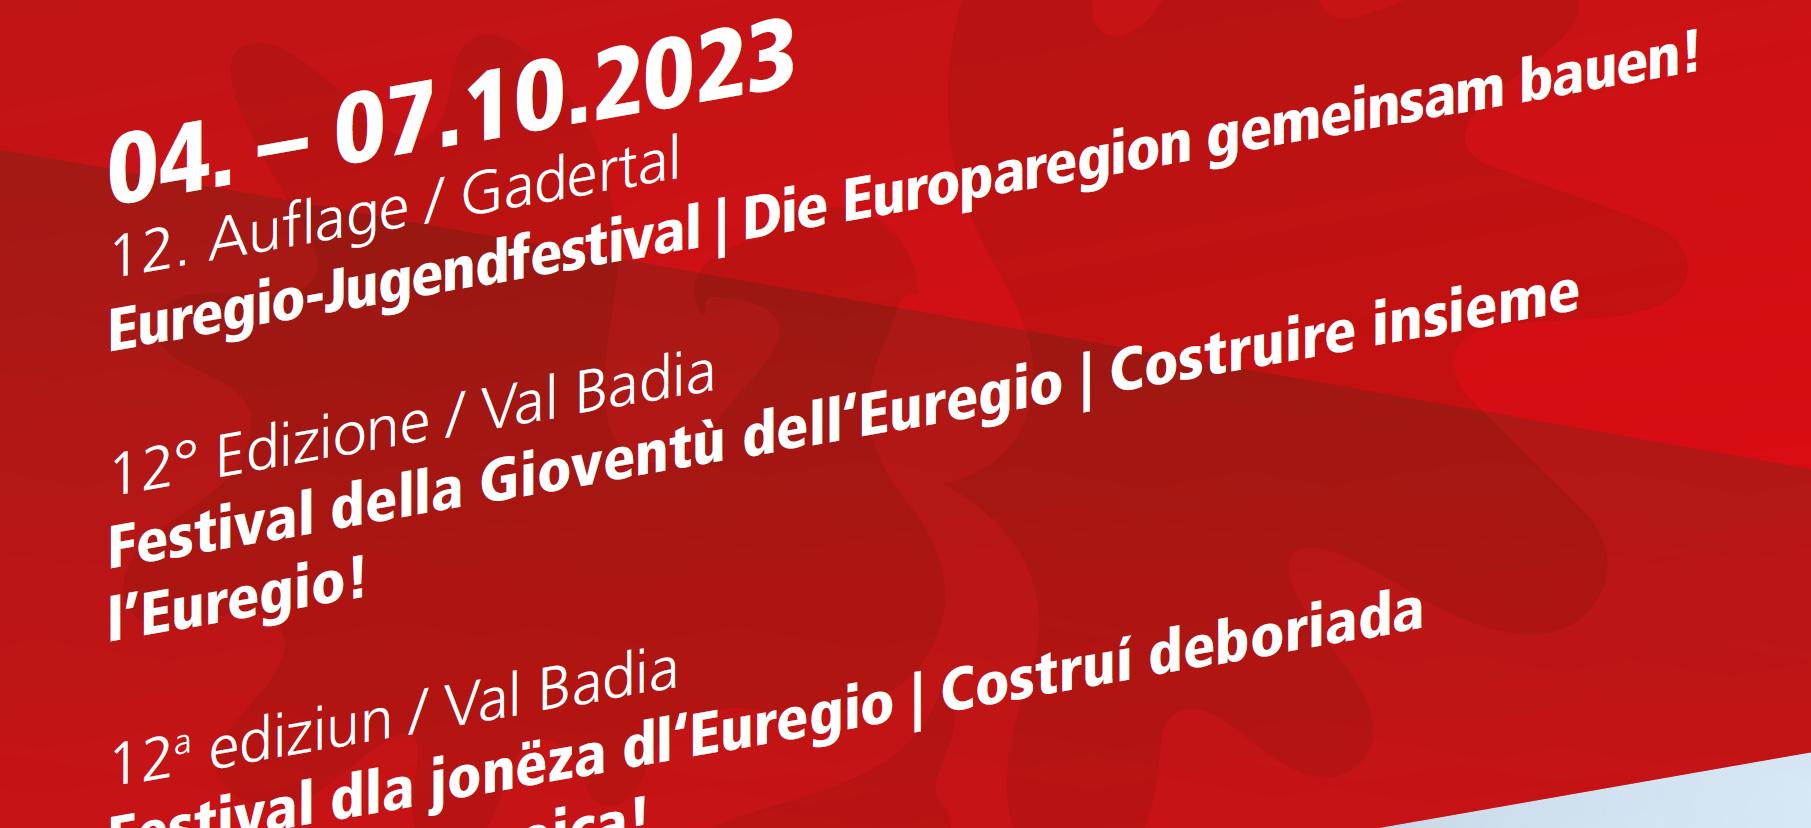 Euregio-Jugendfestival 2023 im Gadertal